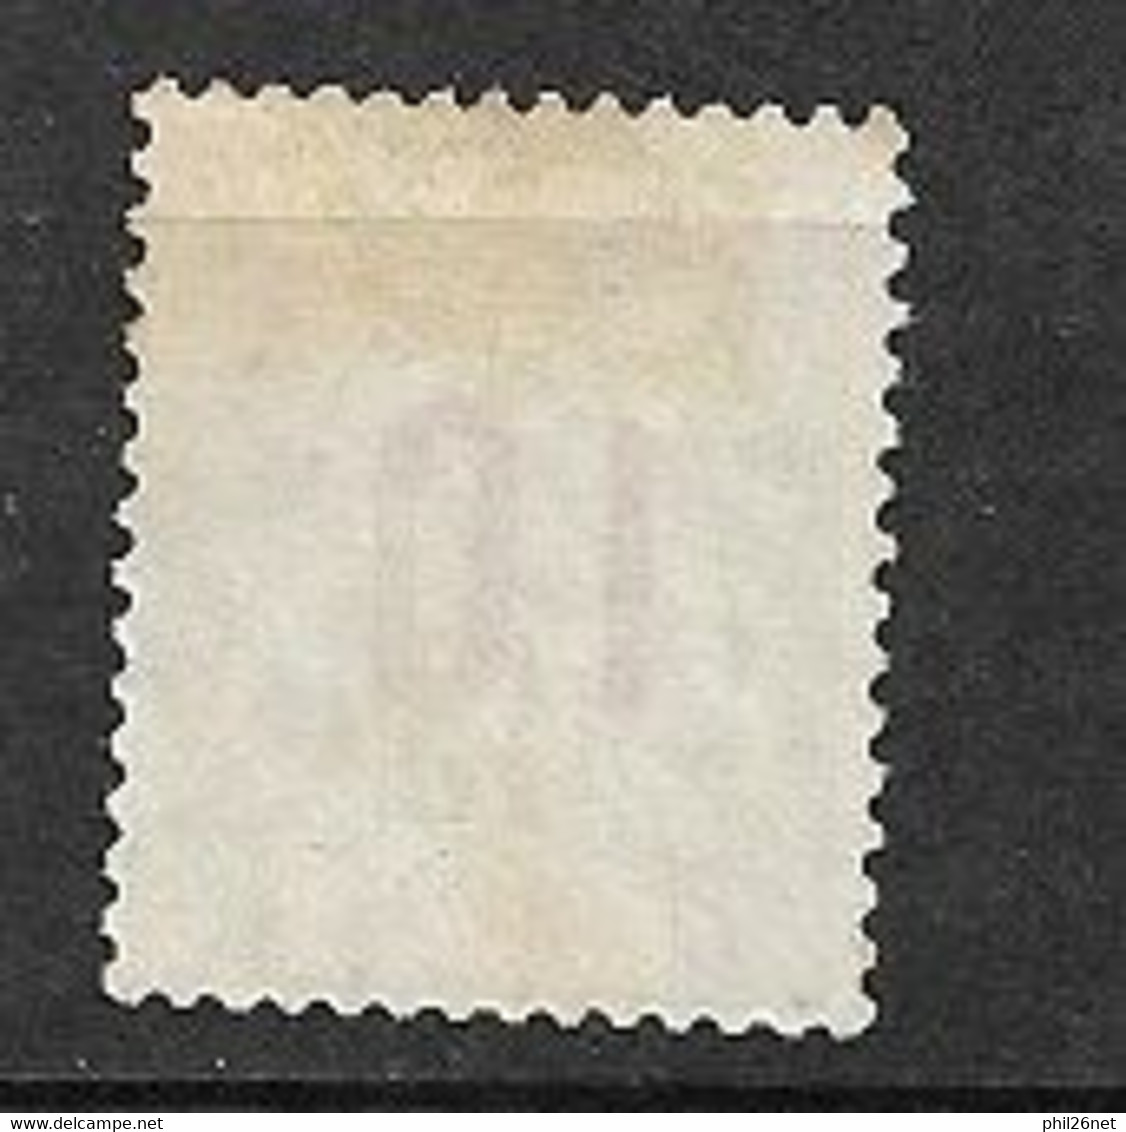 Grande Comore  N° 27A   Oblitéré      B/TB           - Used Stamps